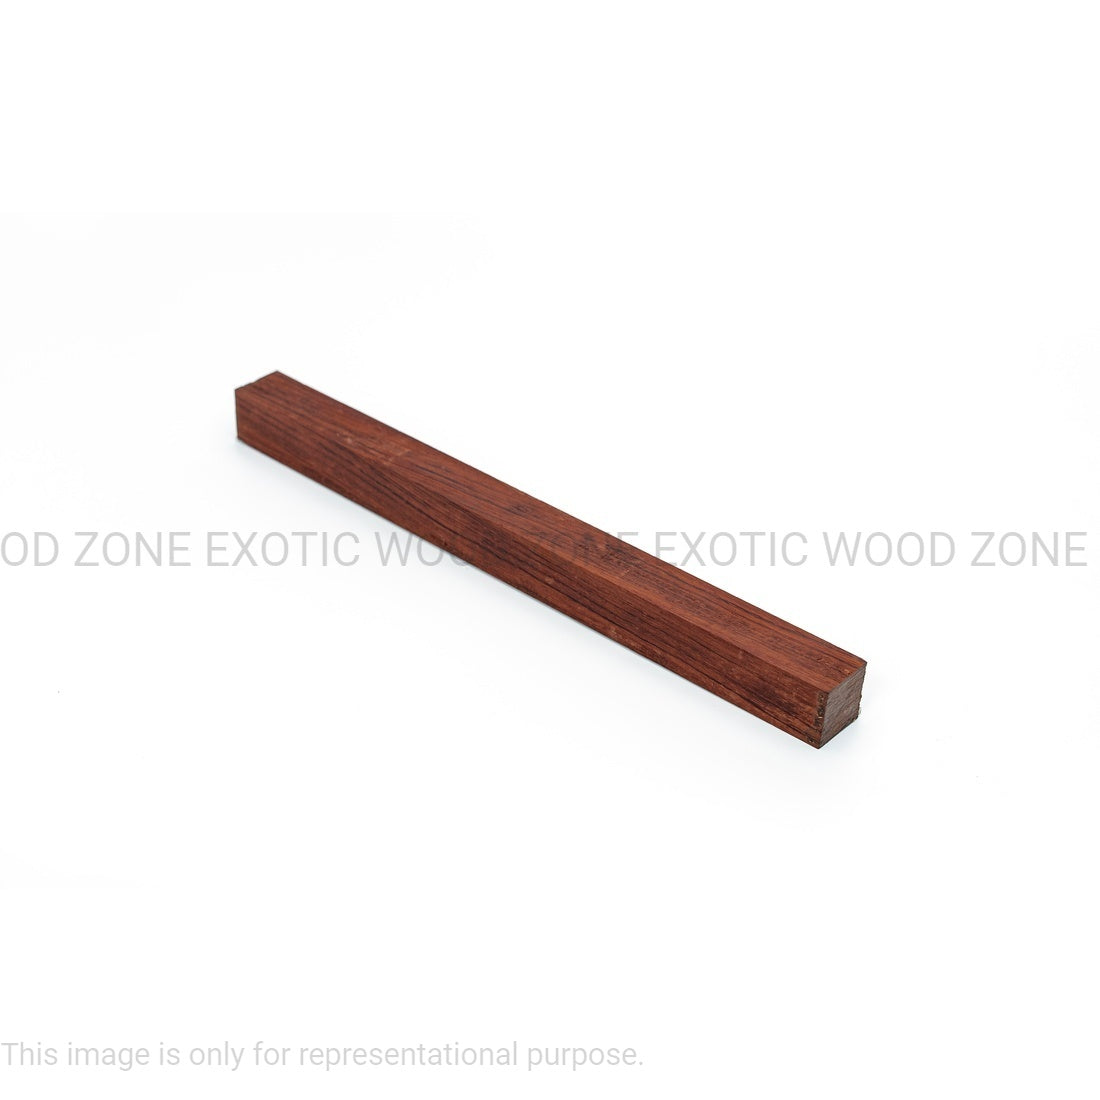 Pack of 3, Bubinga Hobby Wood/ Turning Wood Blanks 1 x 1 x 12 inches